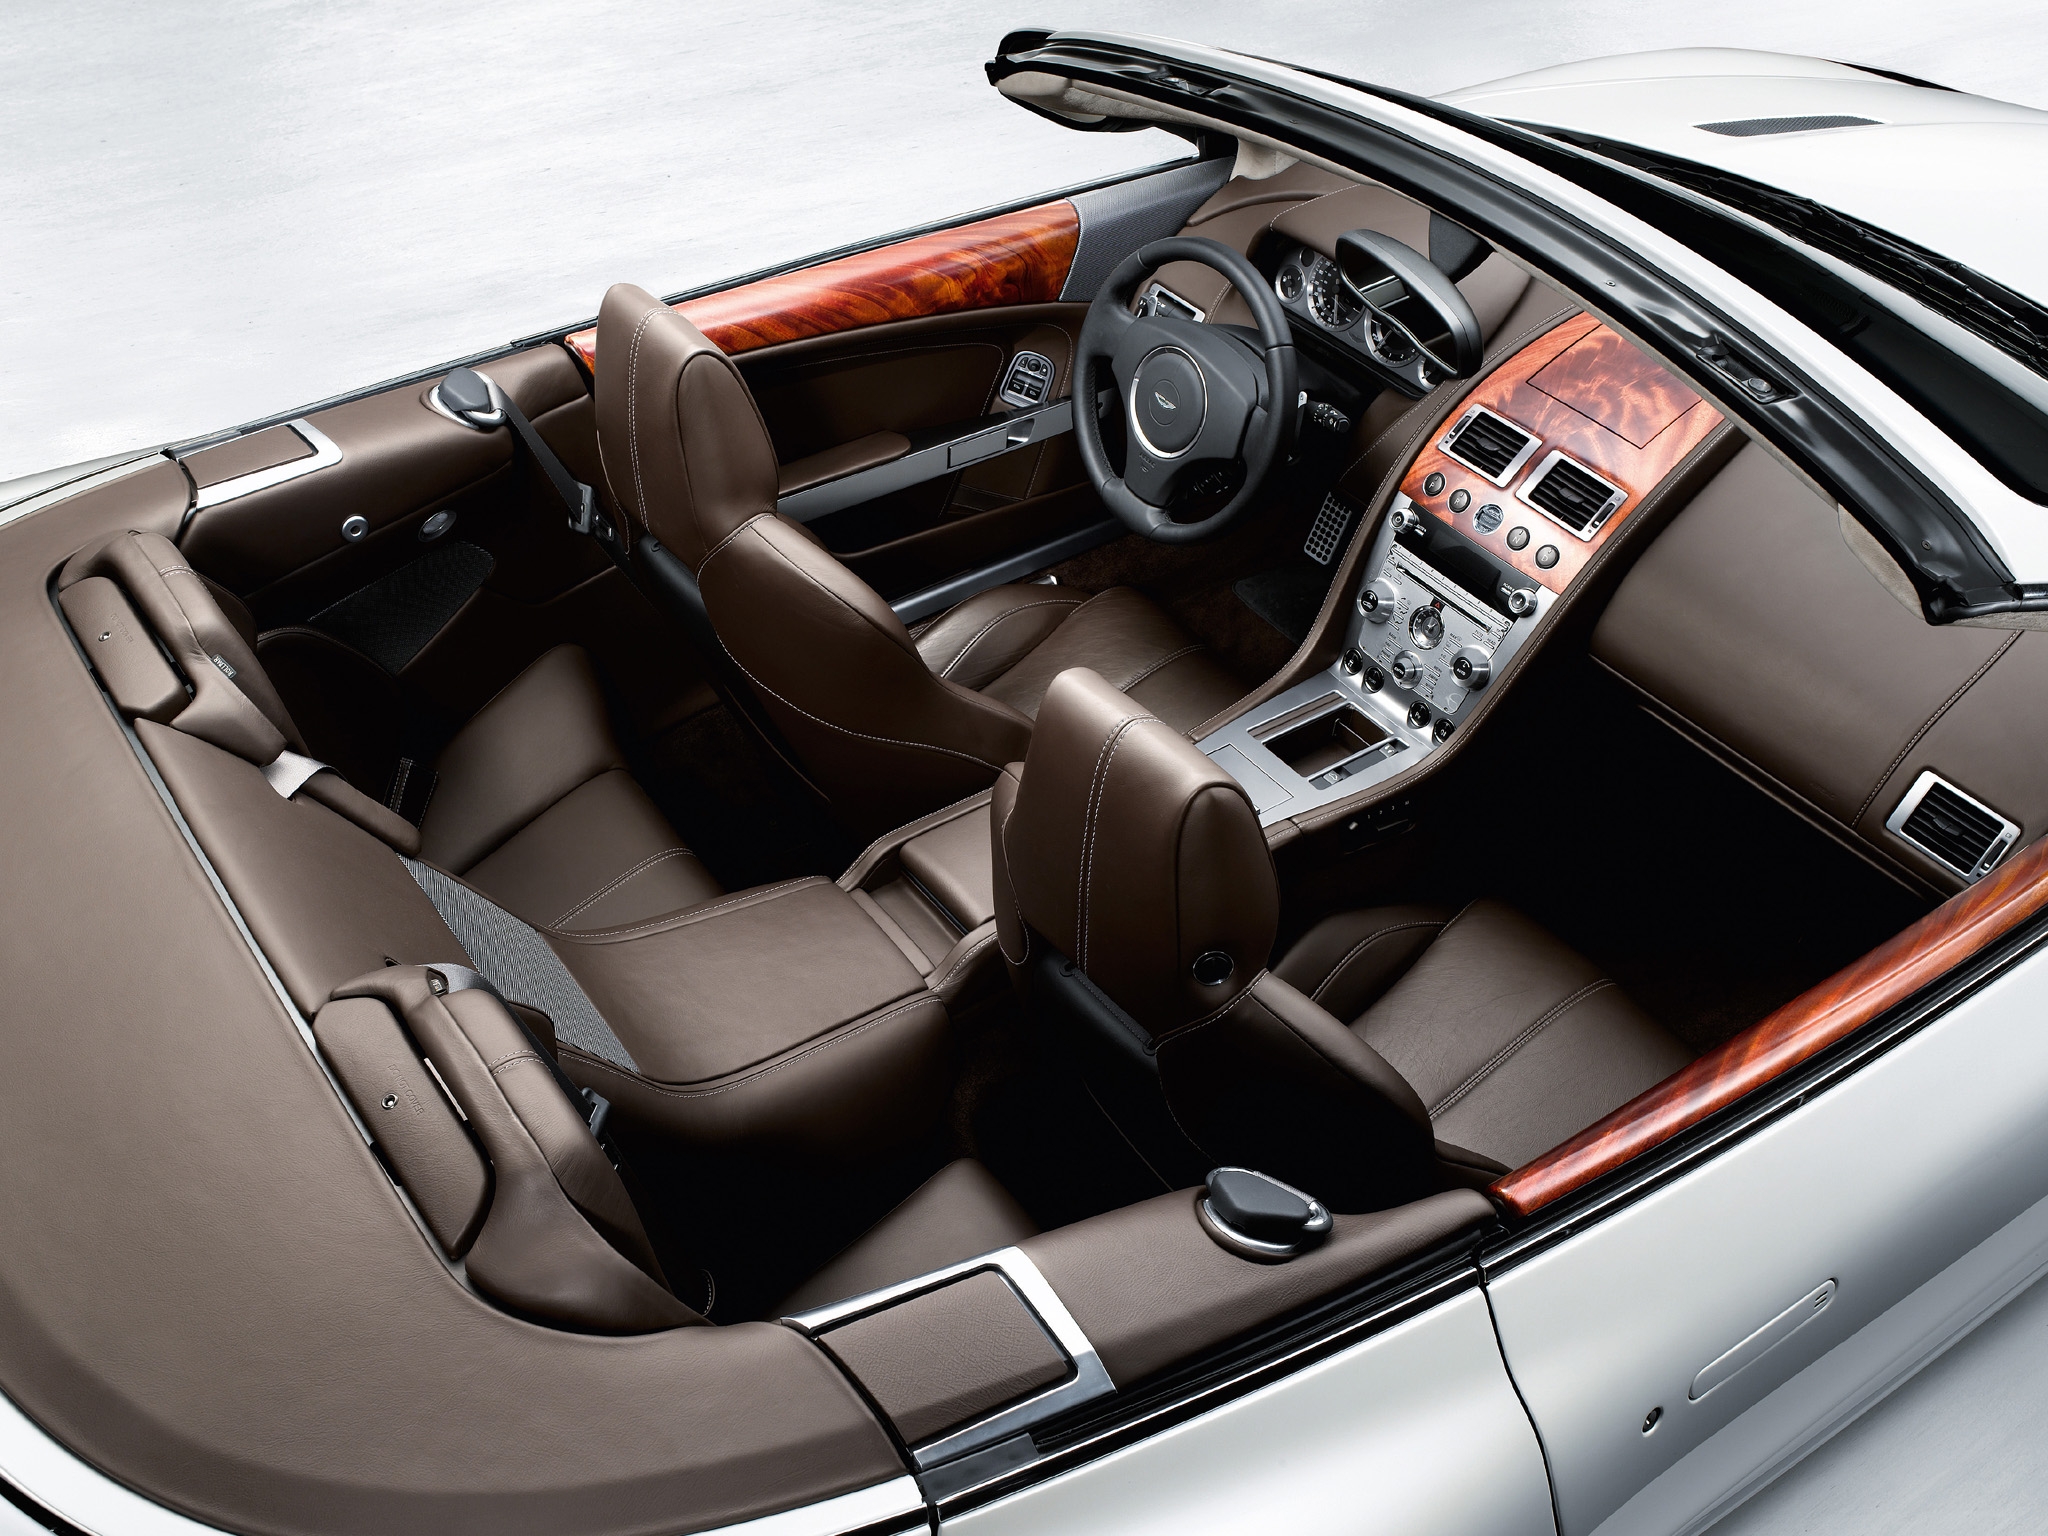 steering wheel, interior, aston martin, cars, view from above, brown, 2008, rudder, salon, speedometer, db9